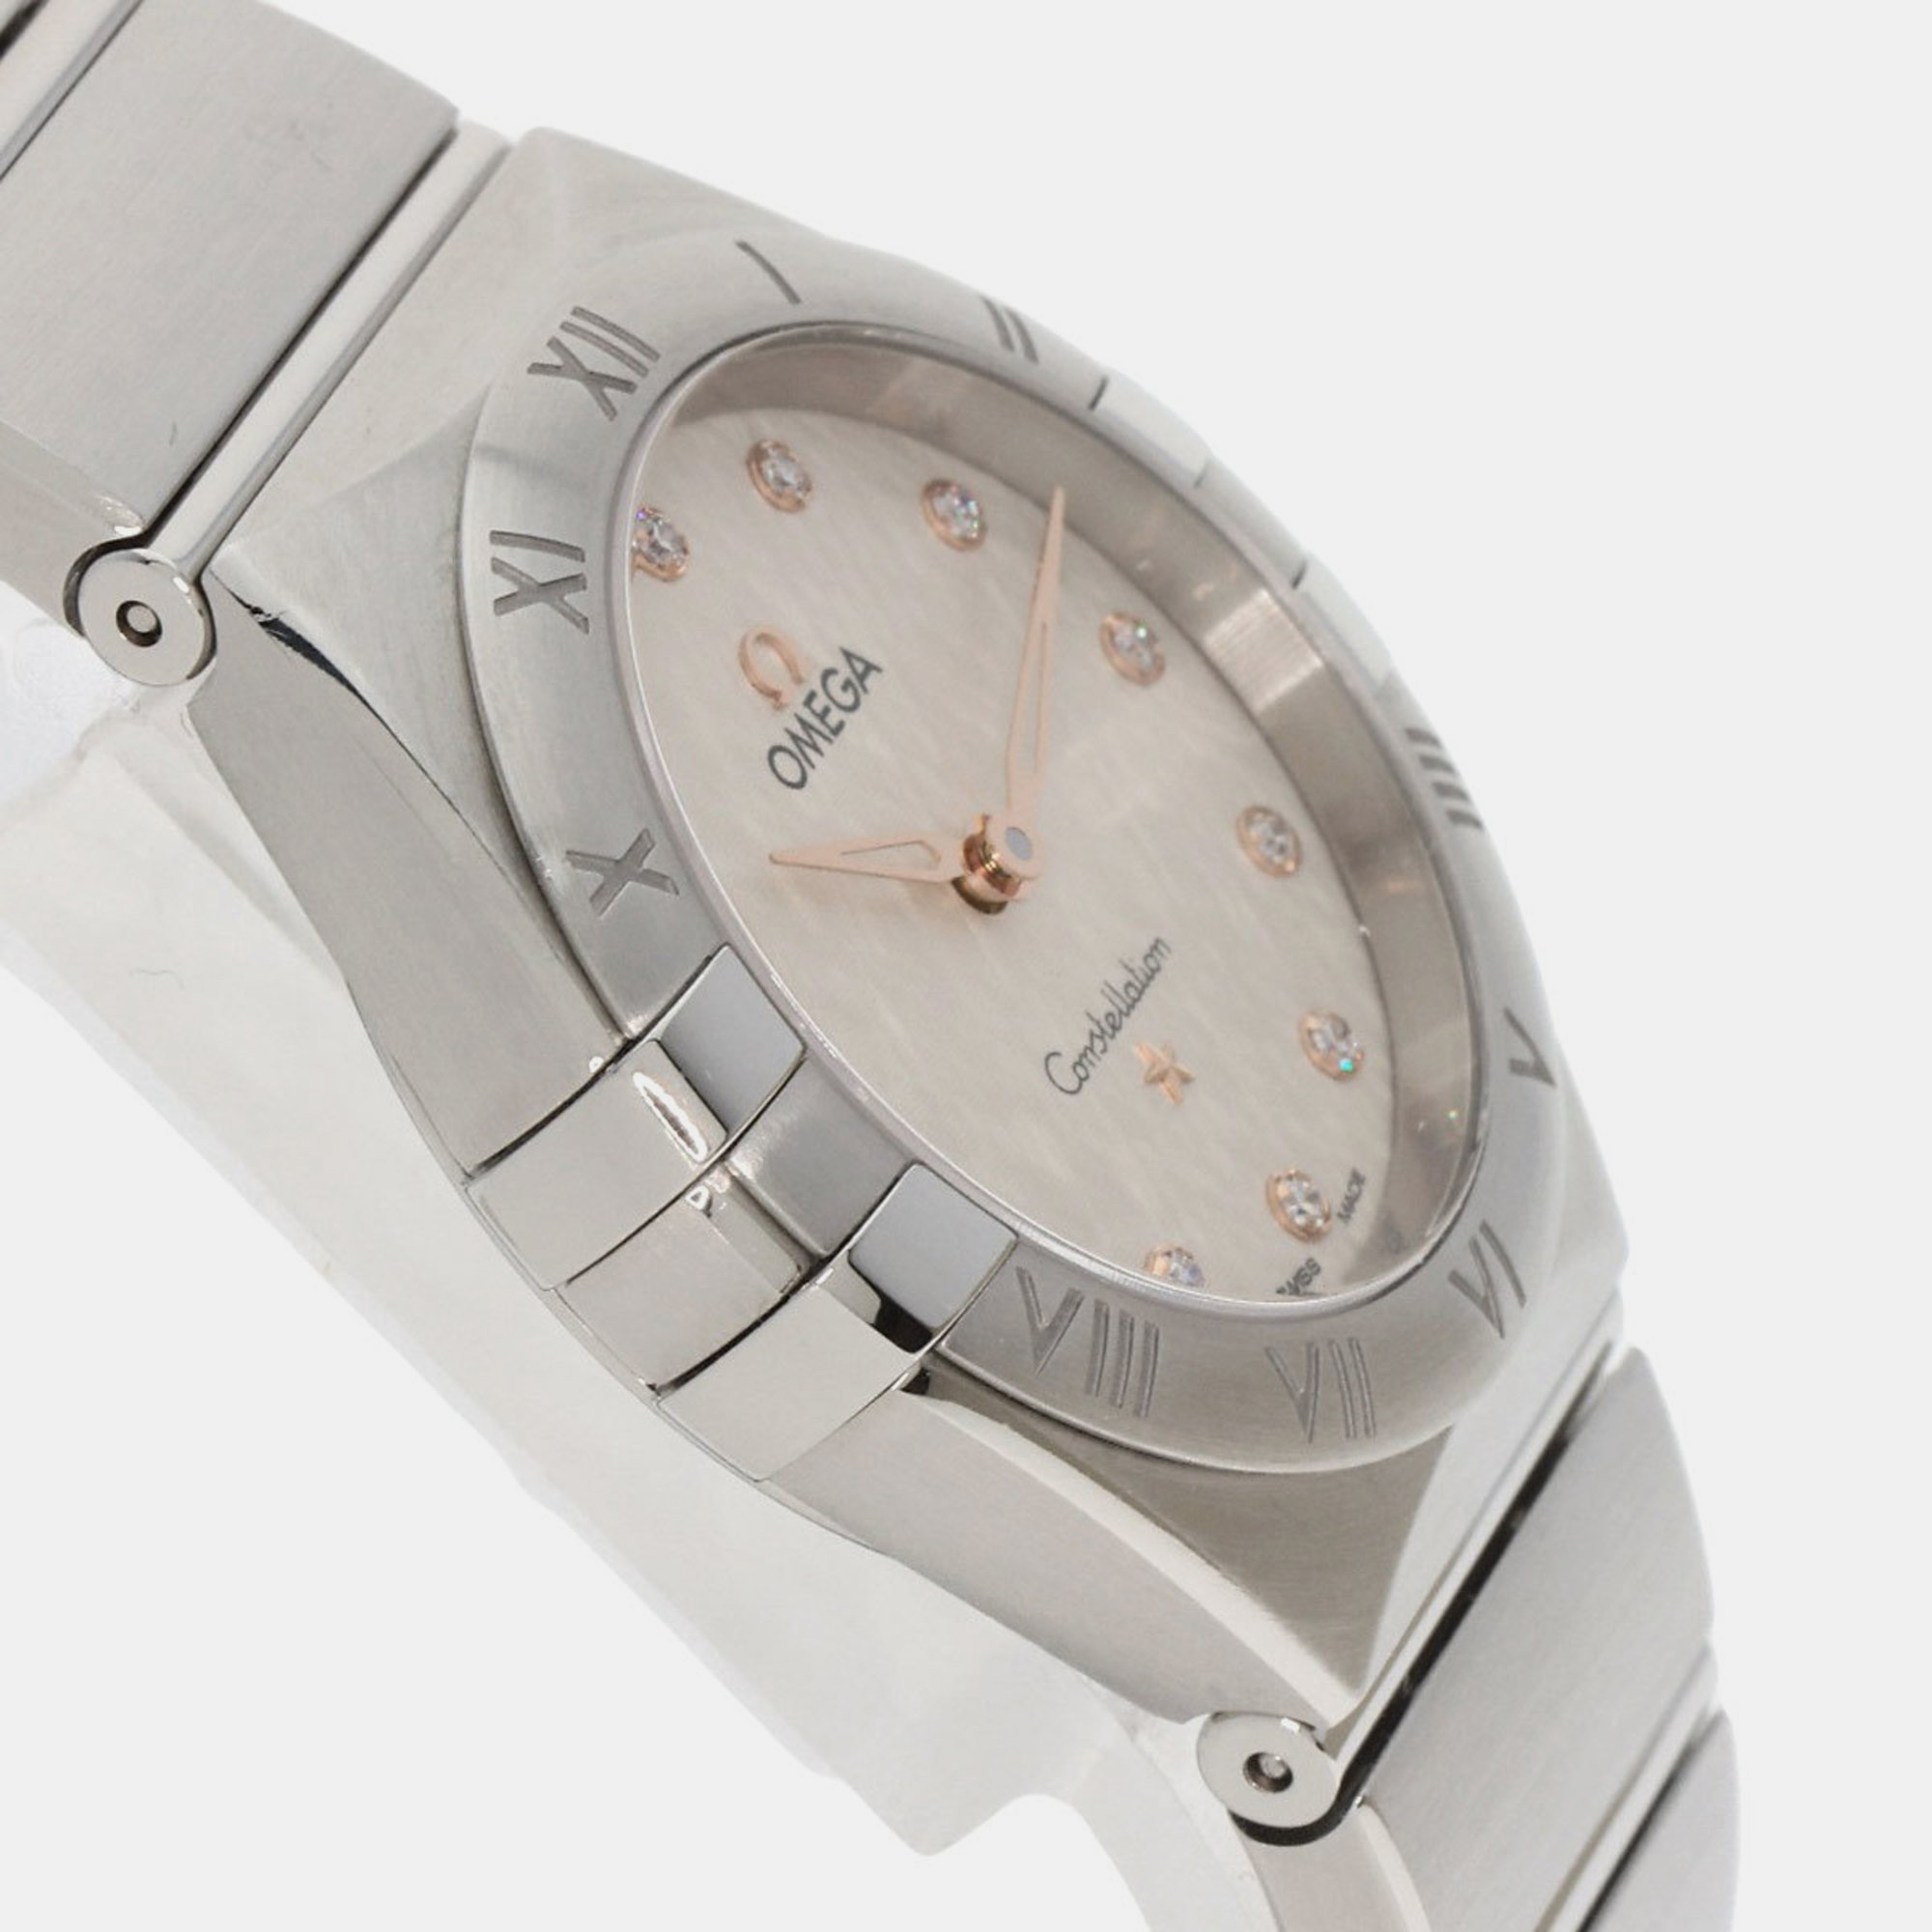 Omega Silver Diamond Stainless Steel Constellation 131.10.28.60.52.001 Quartz Women's Wristwatch 28 Mm